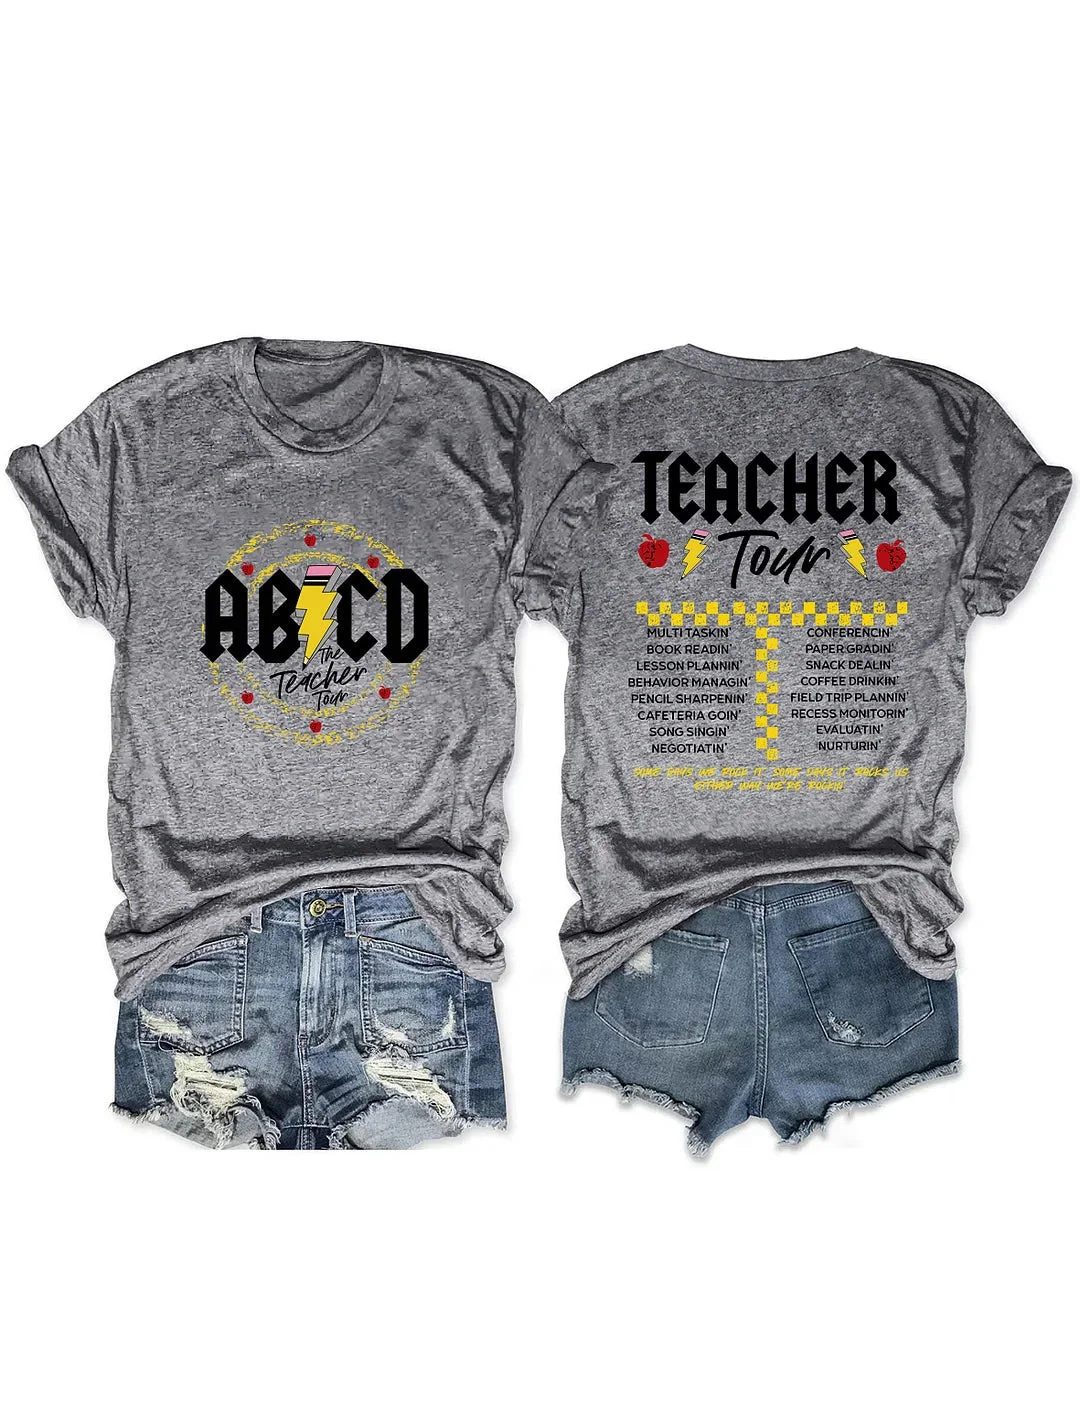 ABCD Teacher Tour Printed Round Neck Short Sleeve T-Shirt